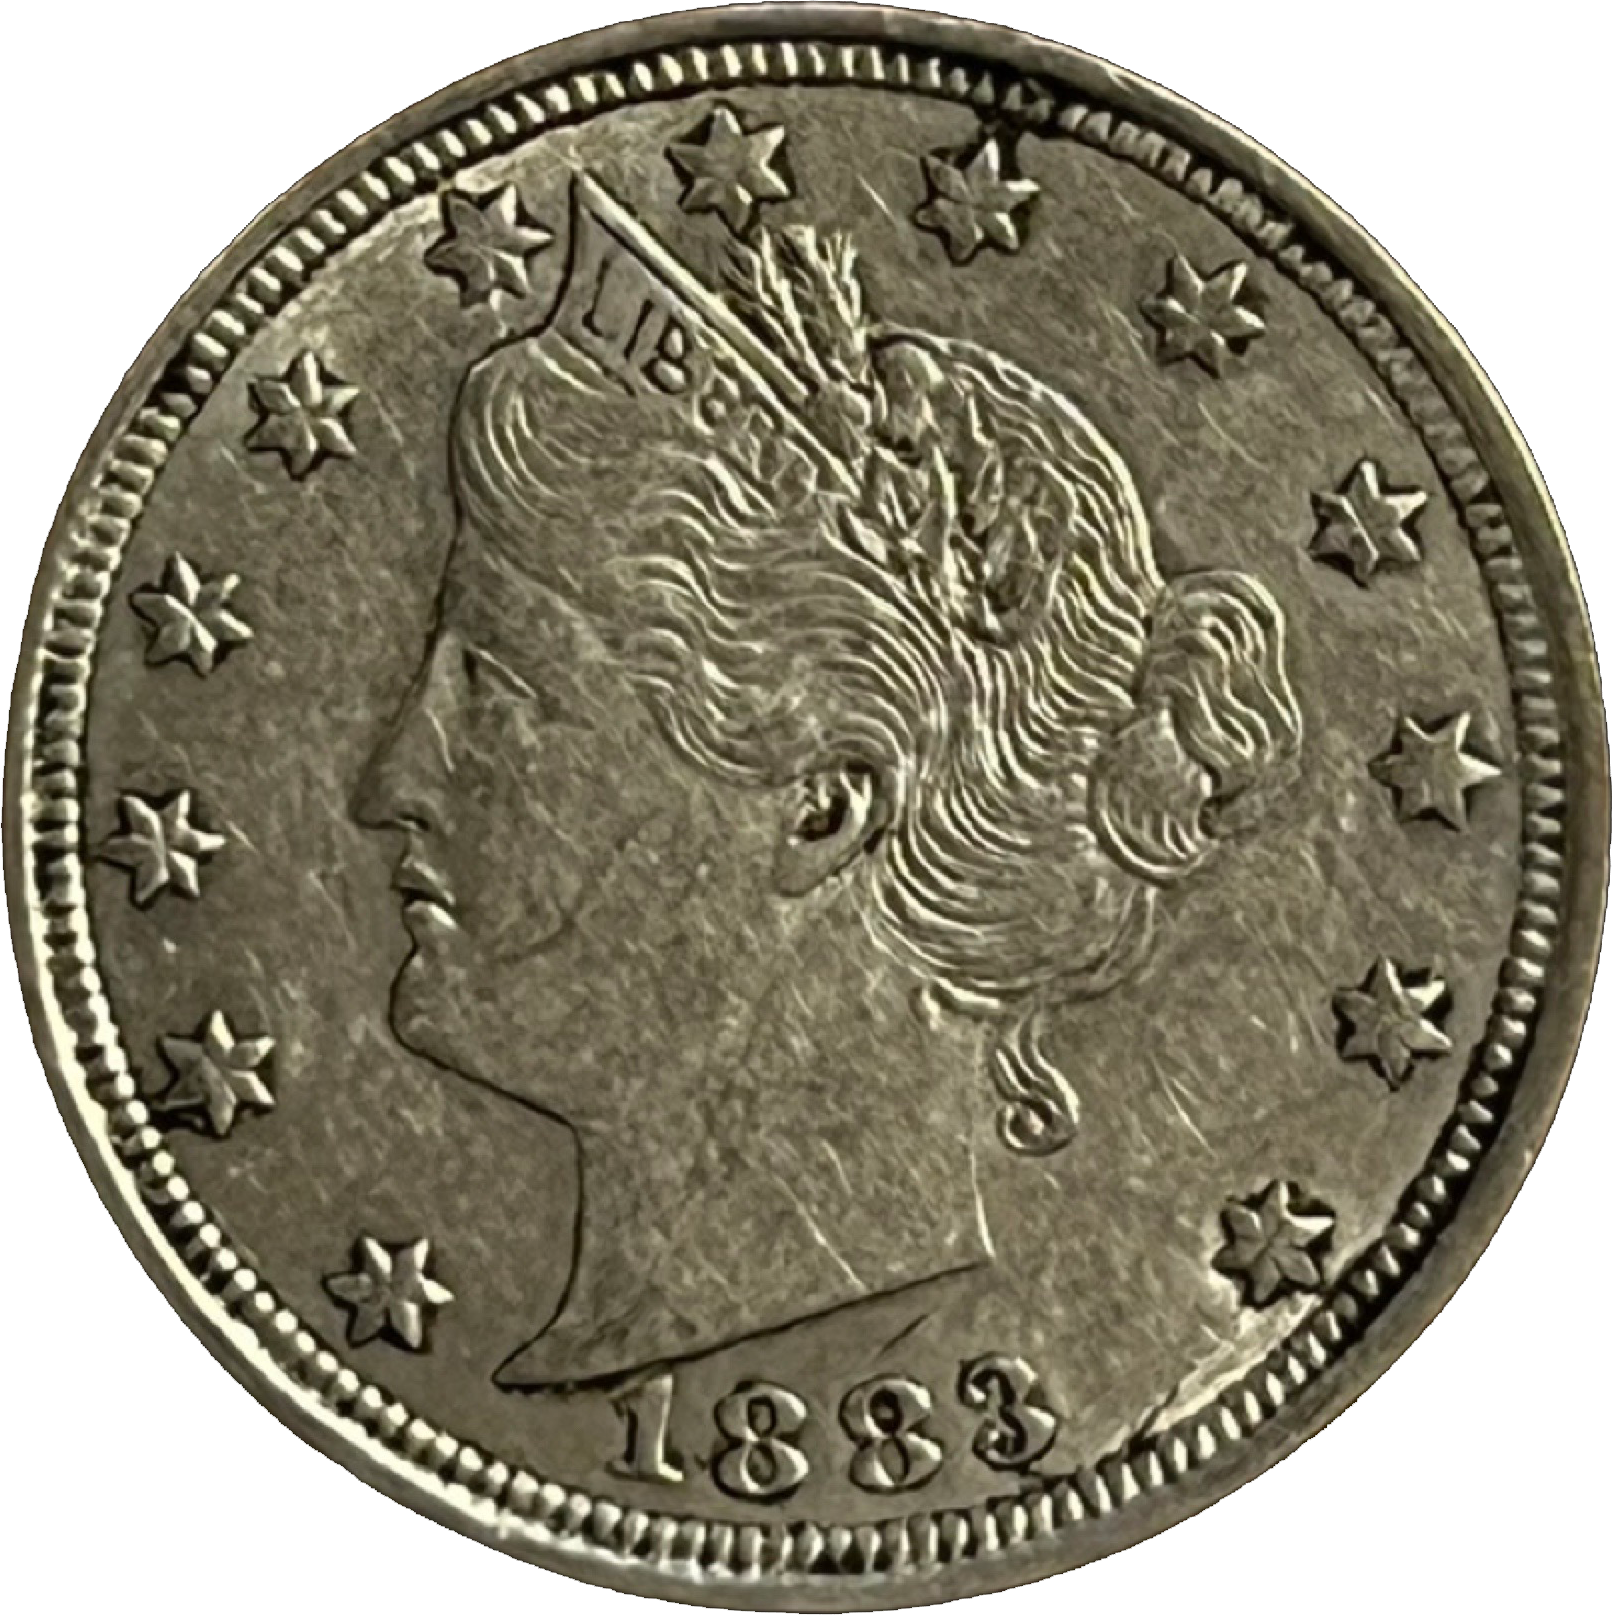  Liberty Nickel (1883 - 1913) 